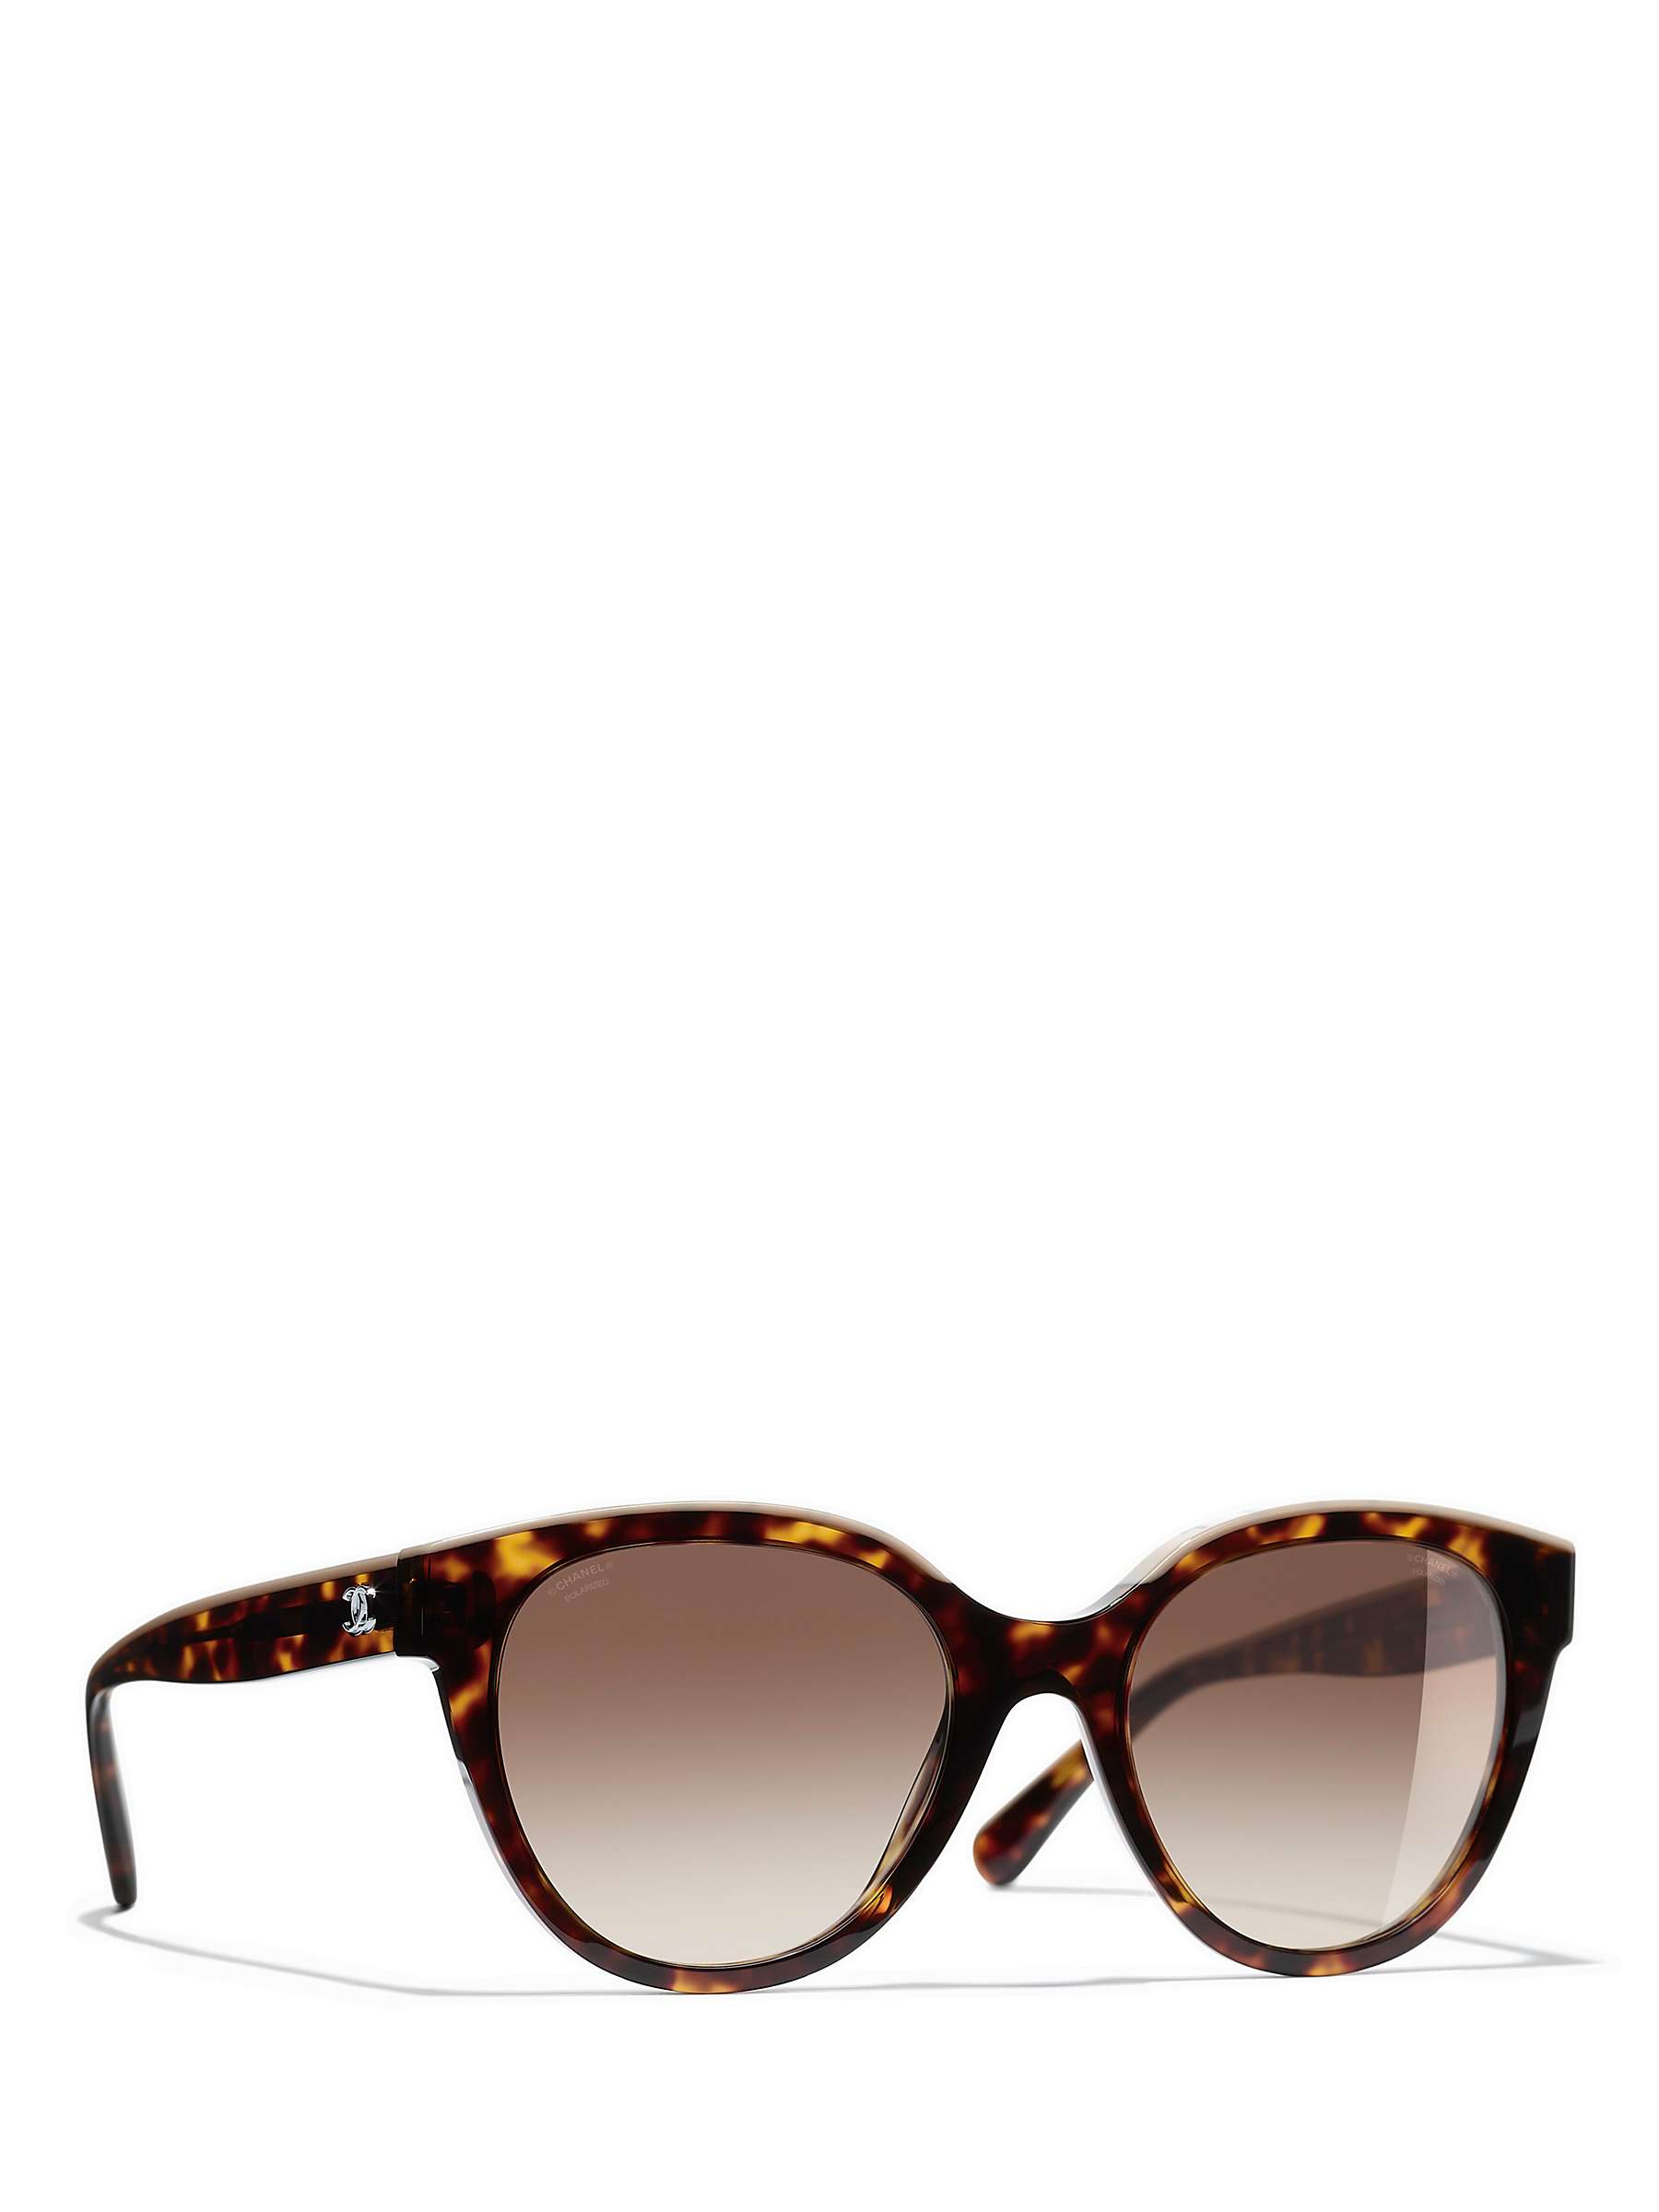 CHANEL Oval Sunglasses CH5414 Dark Havana/Beige at John Lewis & Partners